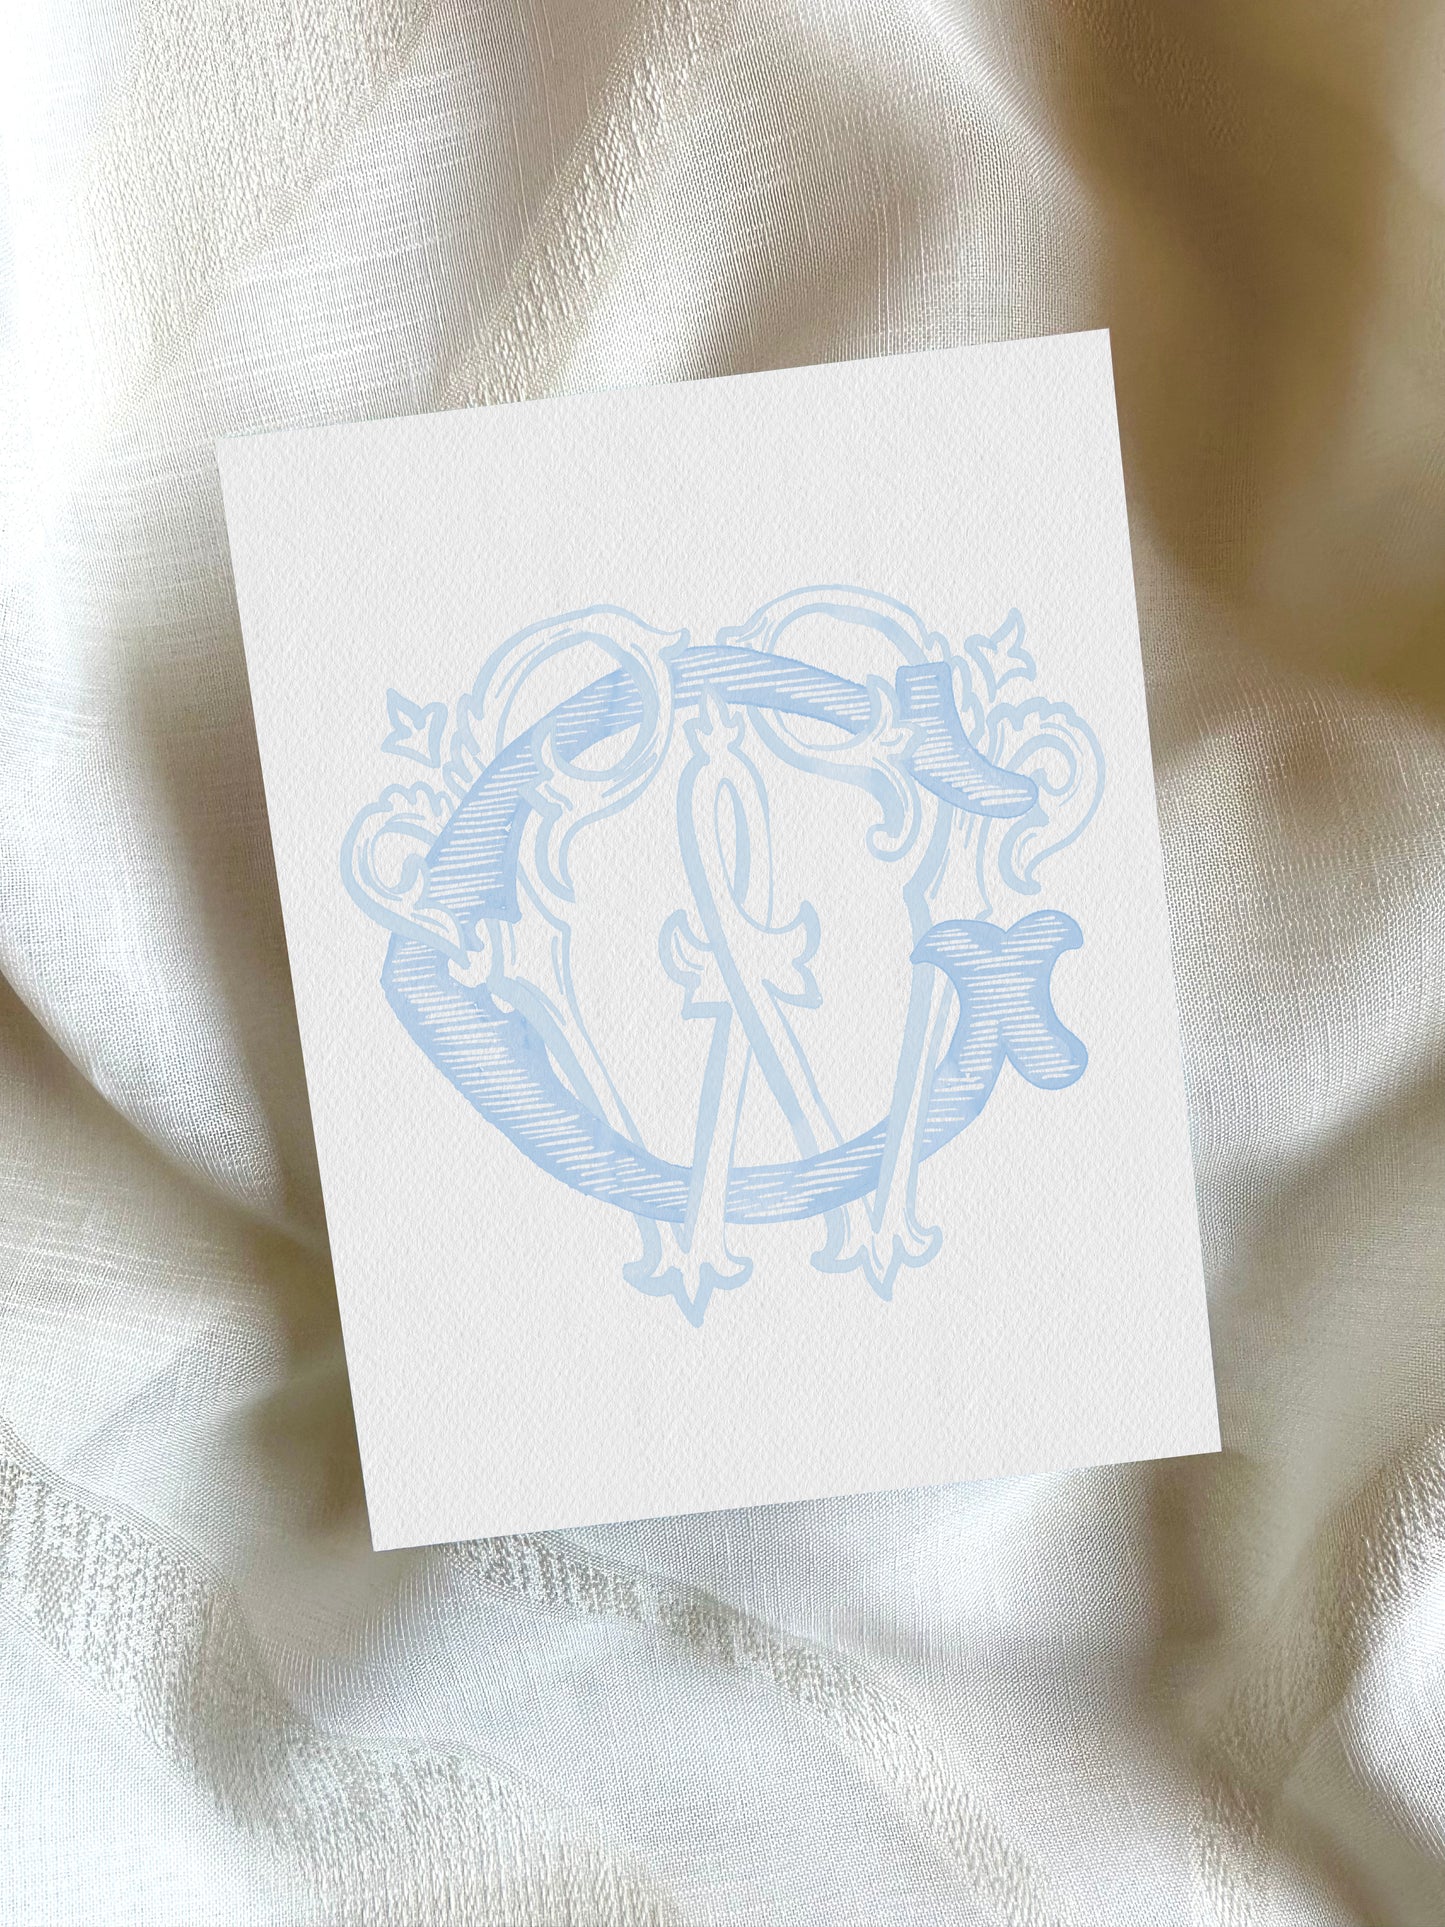 2 Letter Monogram with Letters GW WG | Digital Download - Wedding Monogram SVG, Personal Logo, Wedding Logo for Wedding Invitations The Wedding Crest Lab